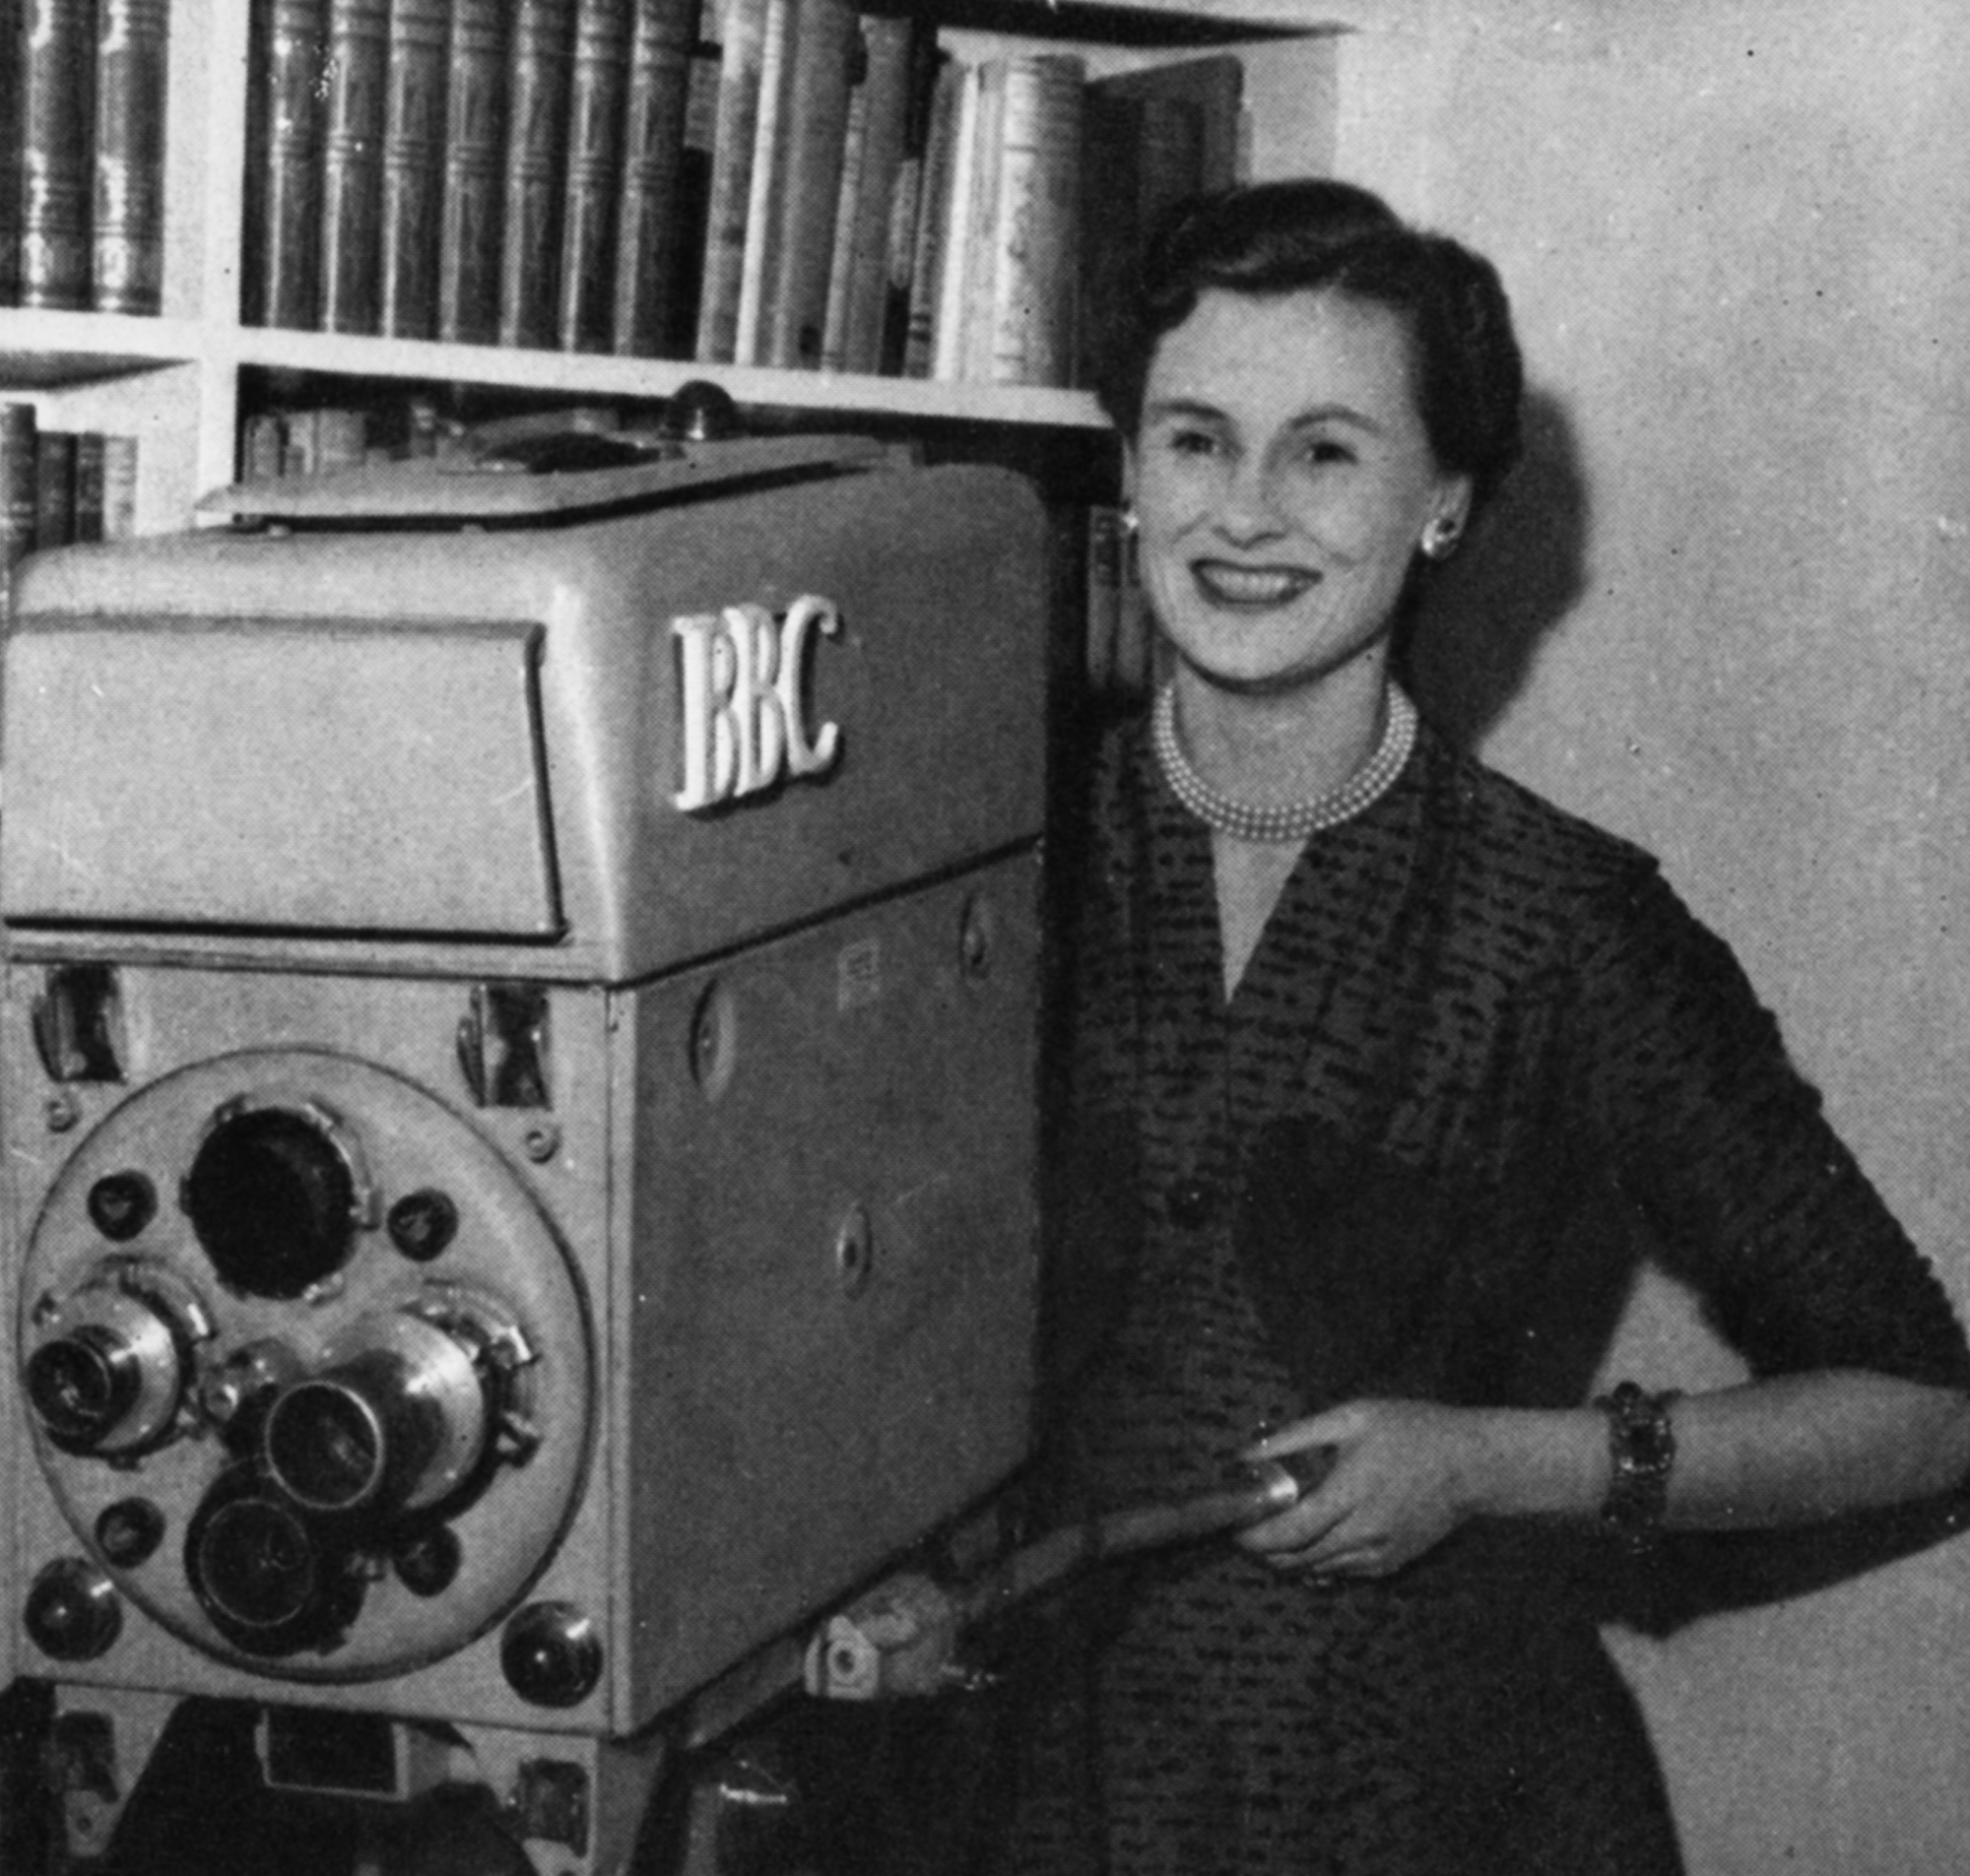 Lady Barnett poses behind a BBC camera